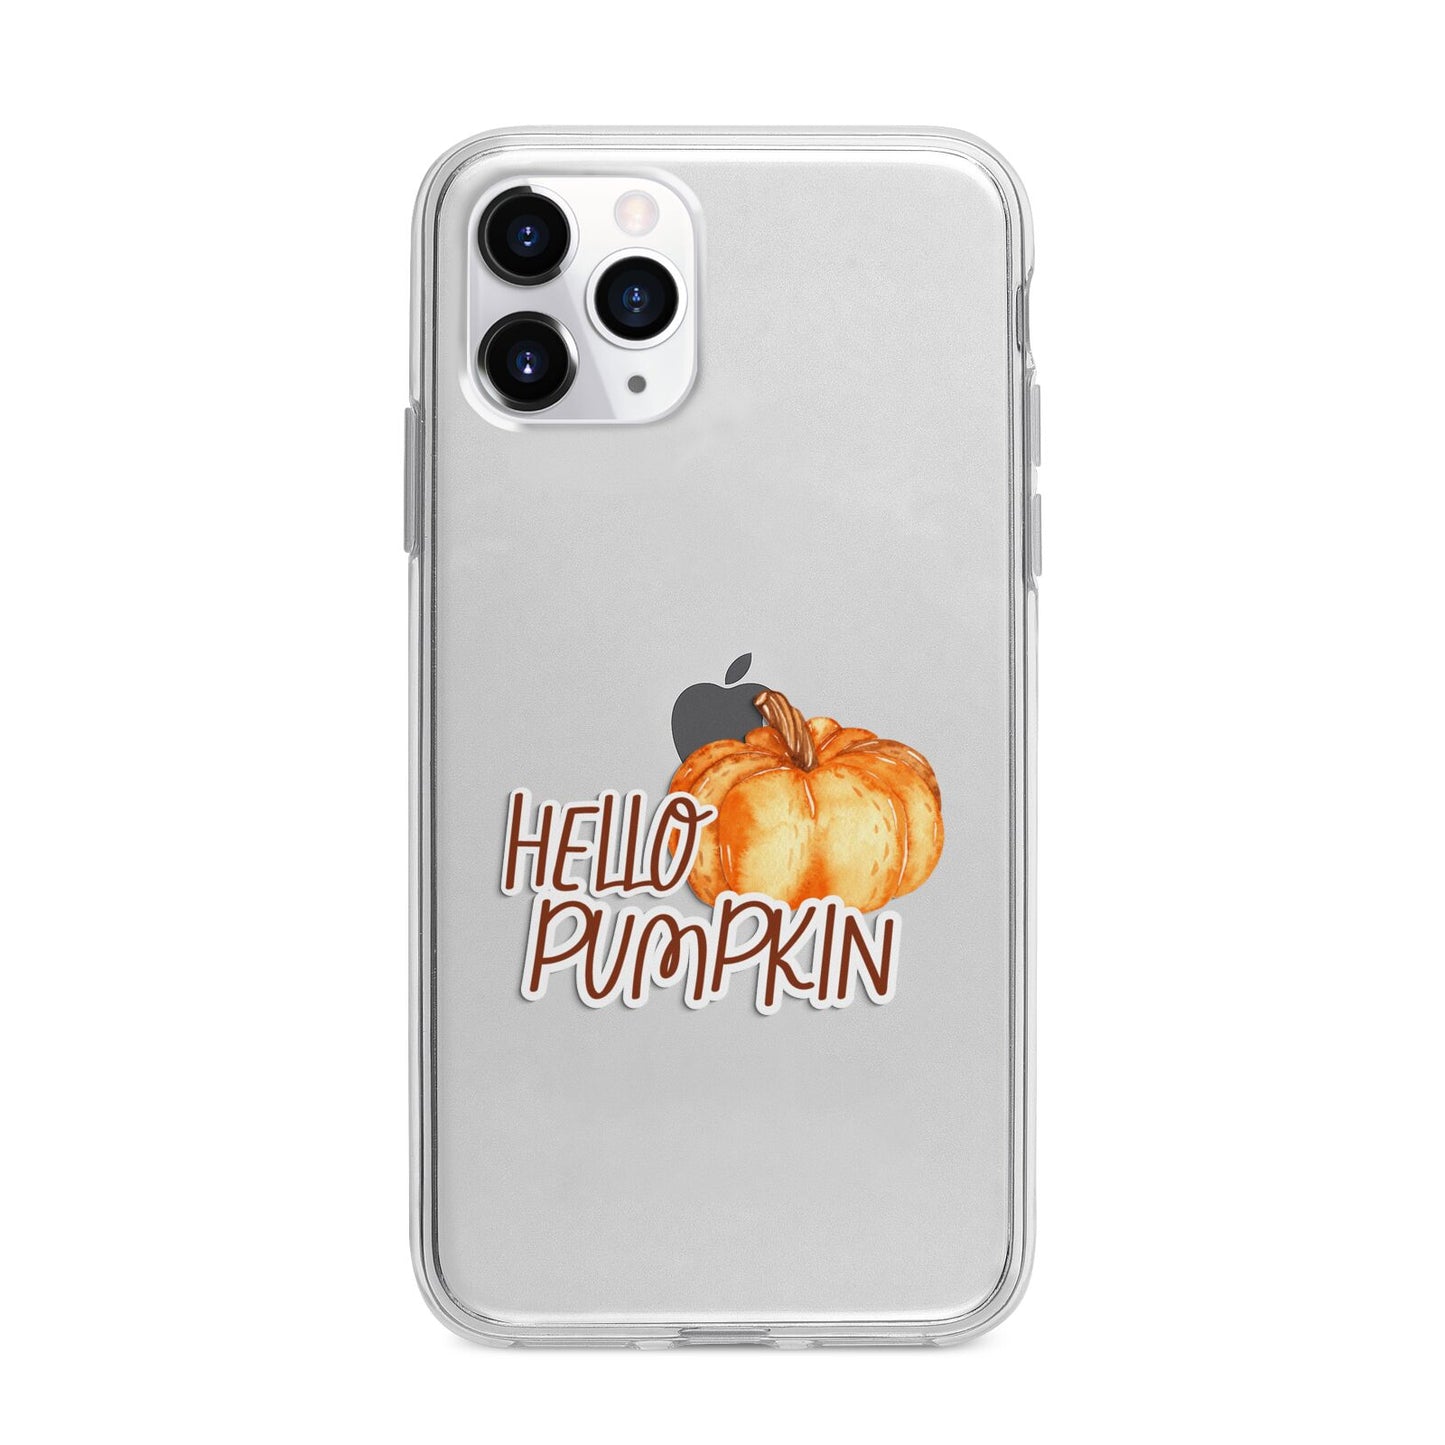 Hello Pumpkin Apple iPhone 11 Pro Max in Silver with Bumper Case